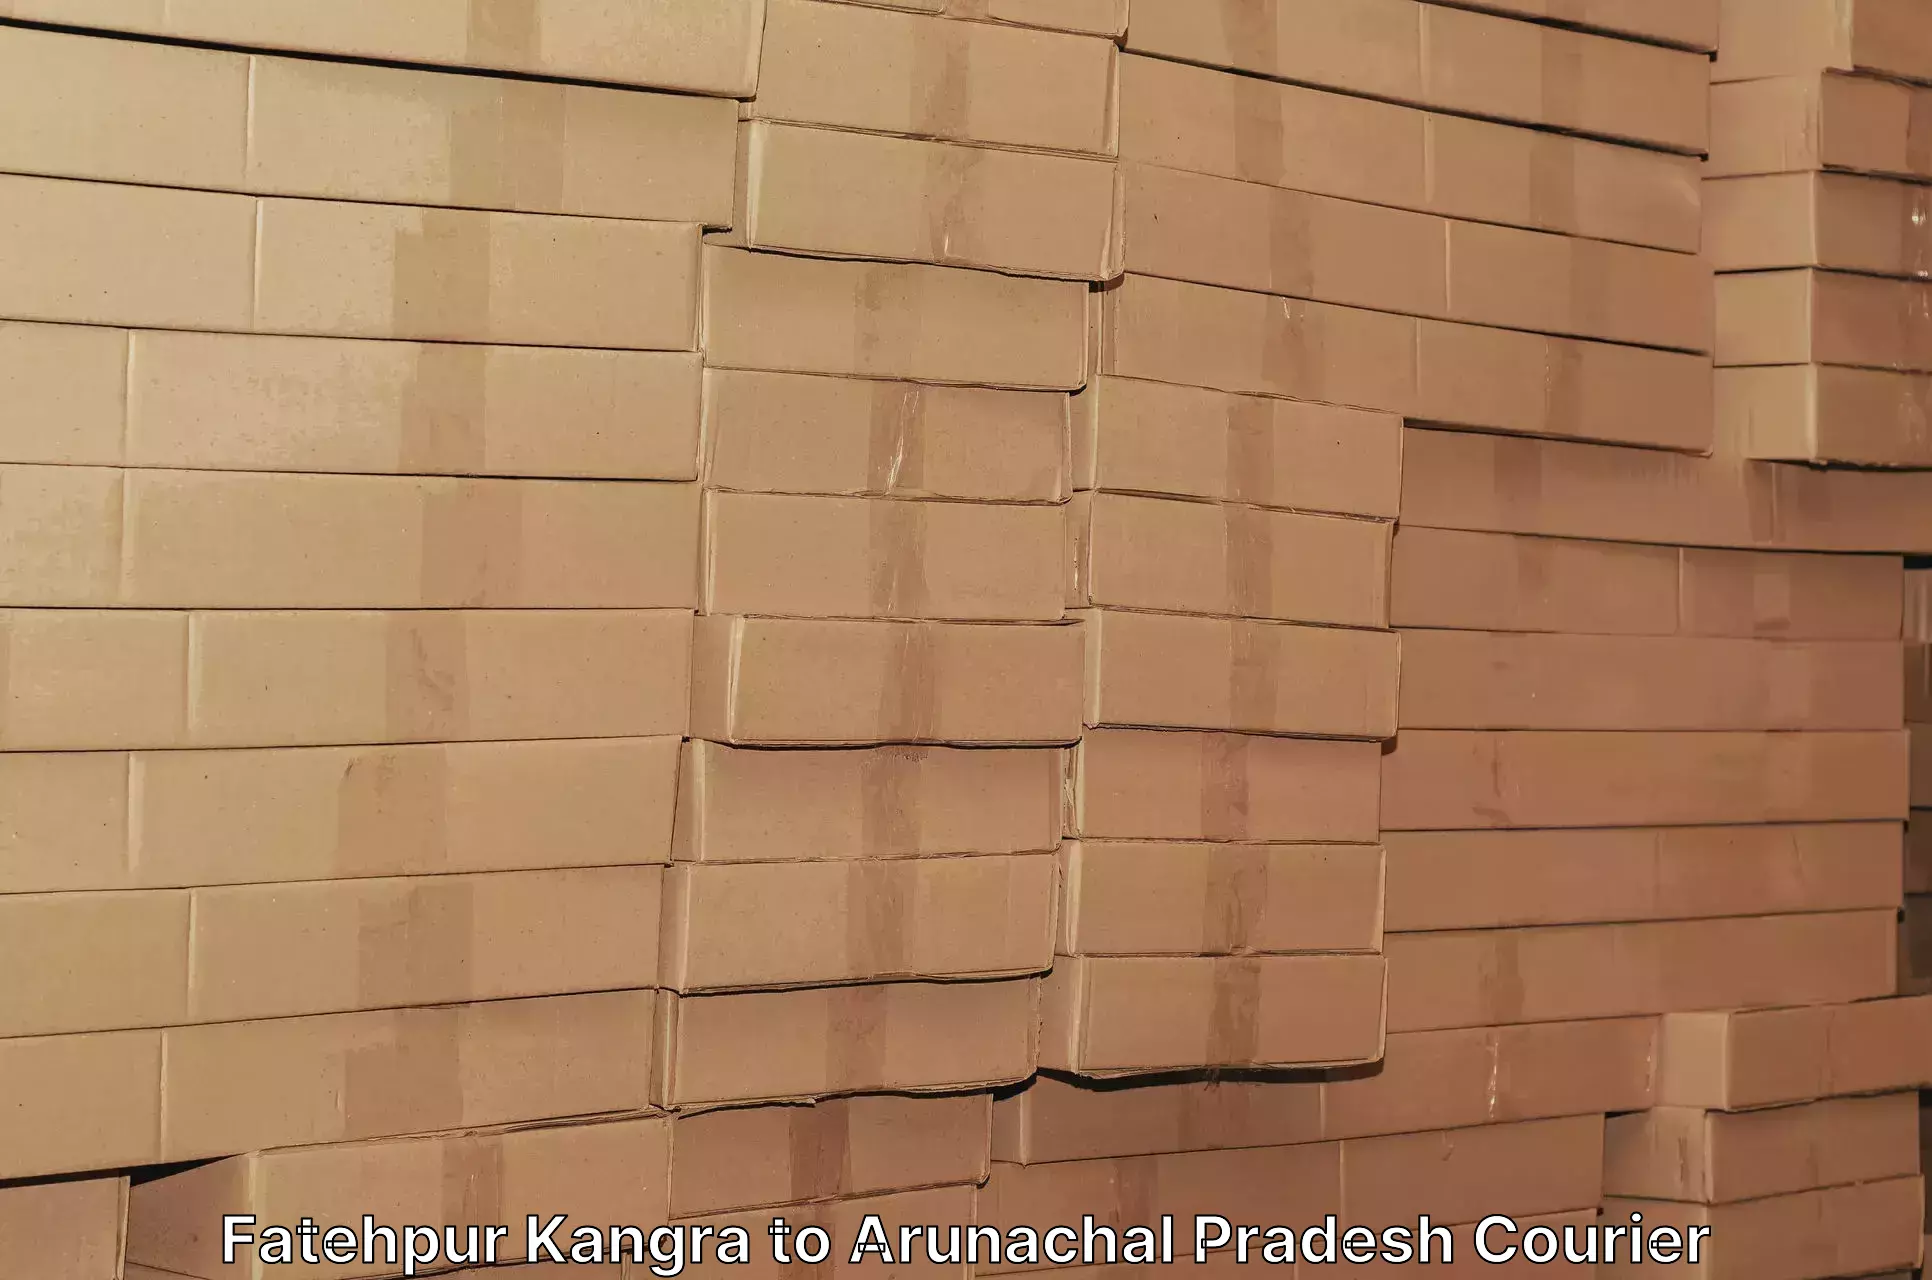 Enhanced tracking features Fatehpur Kangra to Upper Subansiri